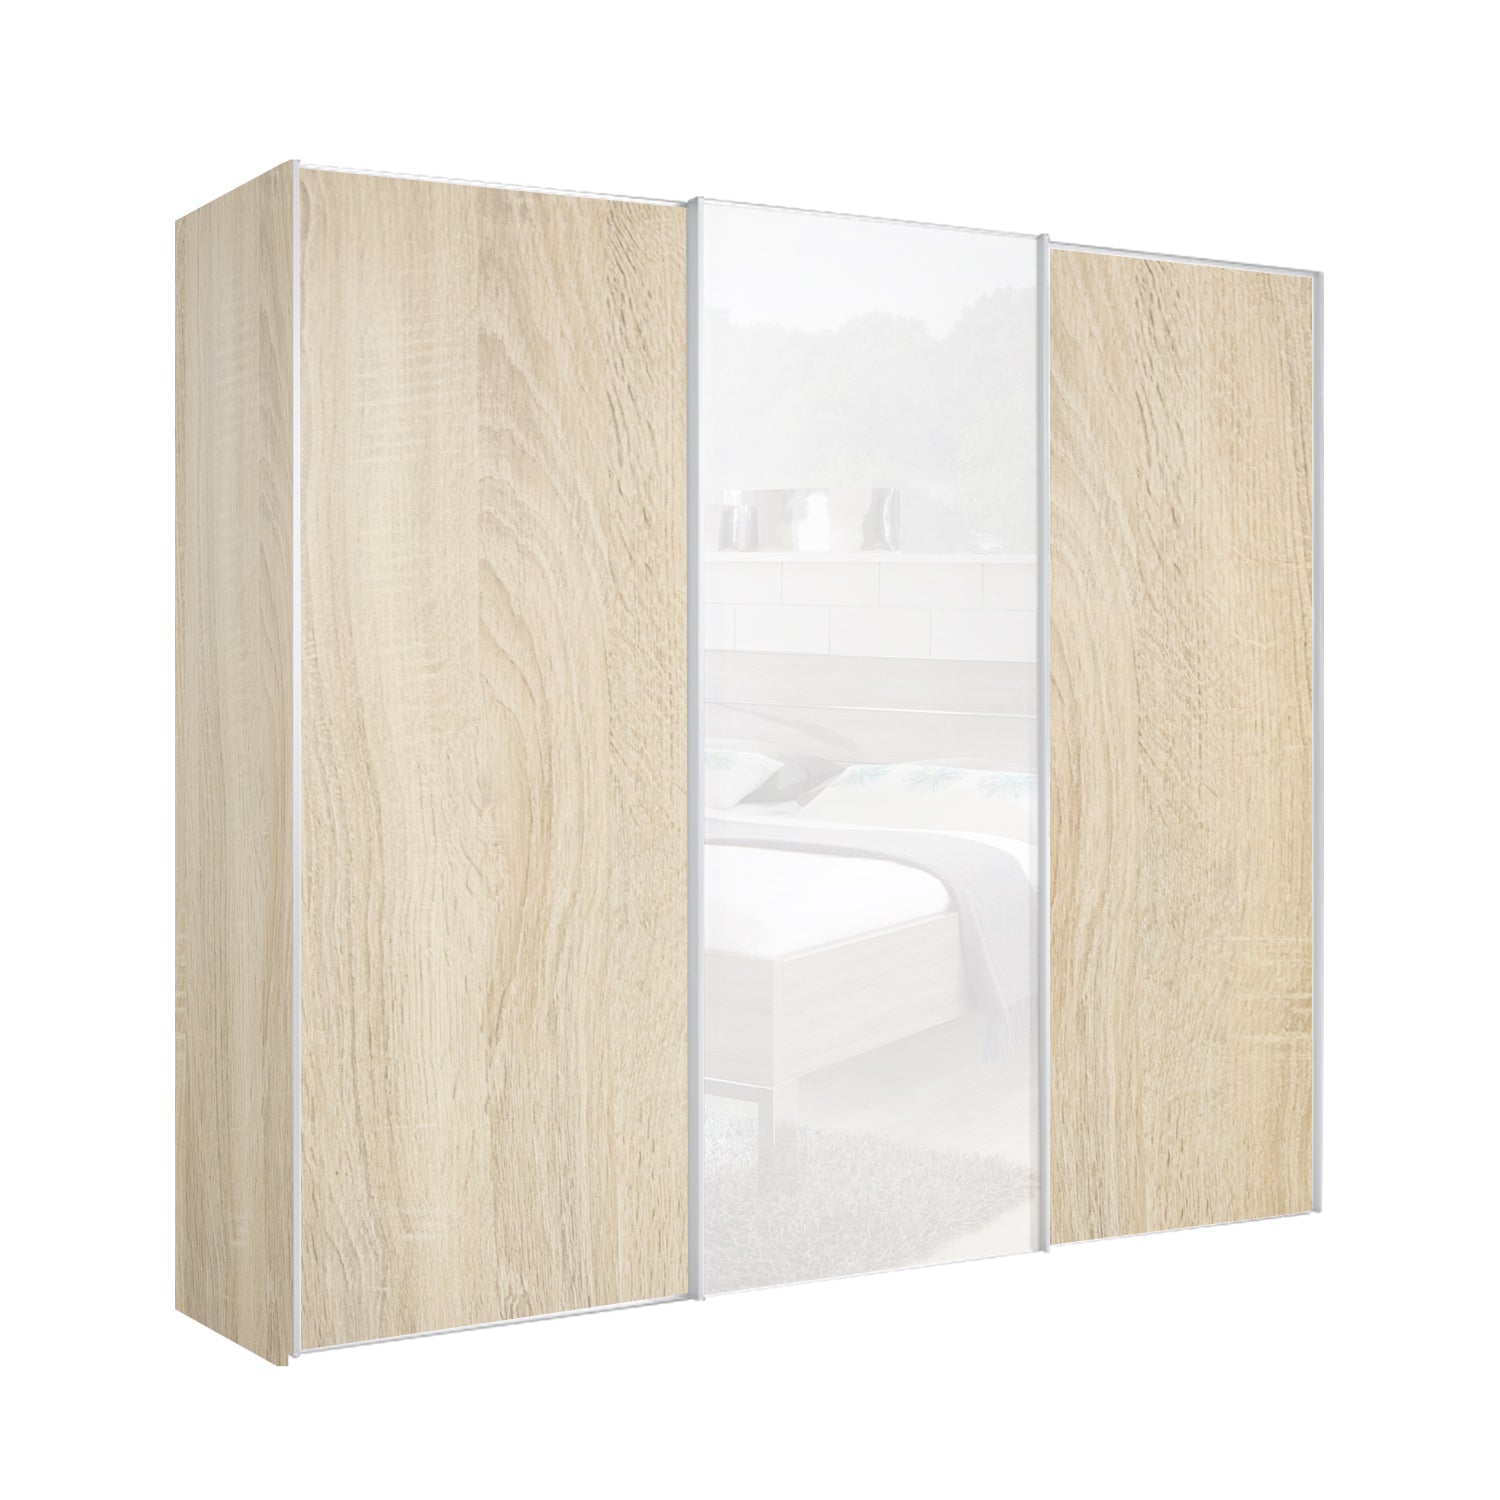 Chicago 225cm Sliding Wardrobe - Wooden Finish & All Glass Doors Light Wood